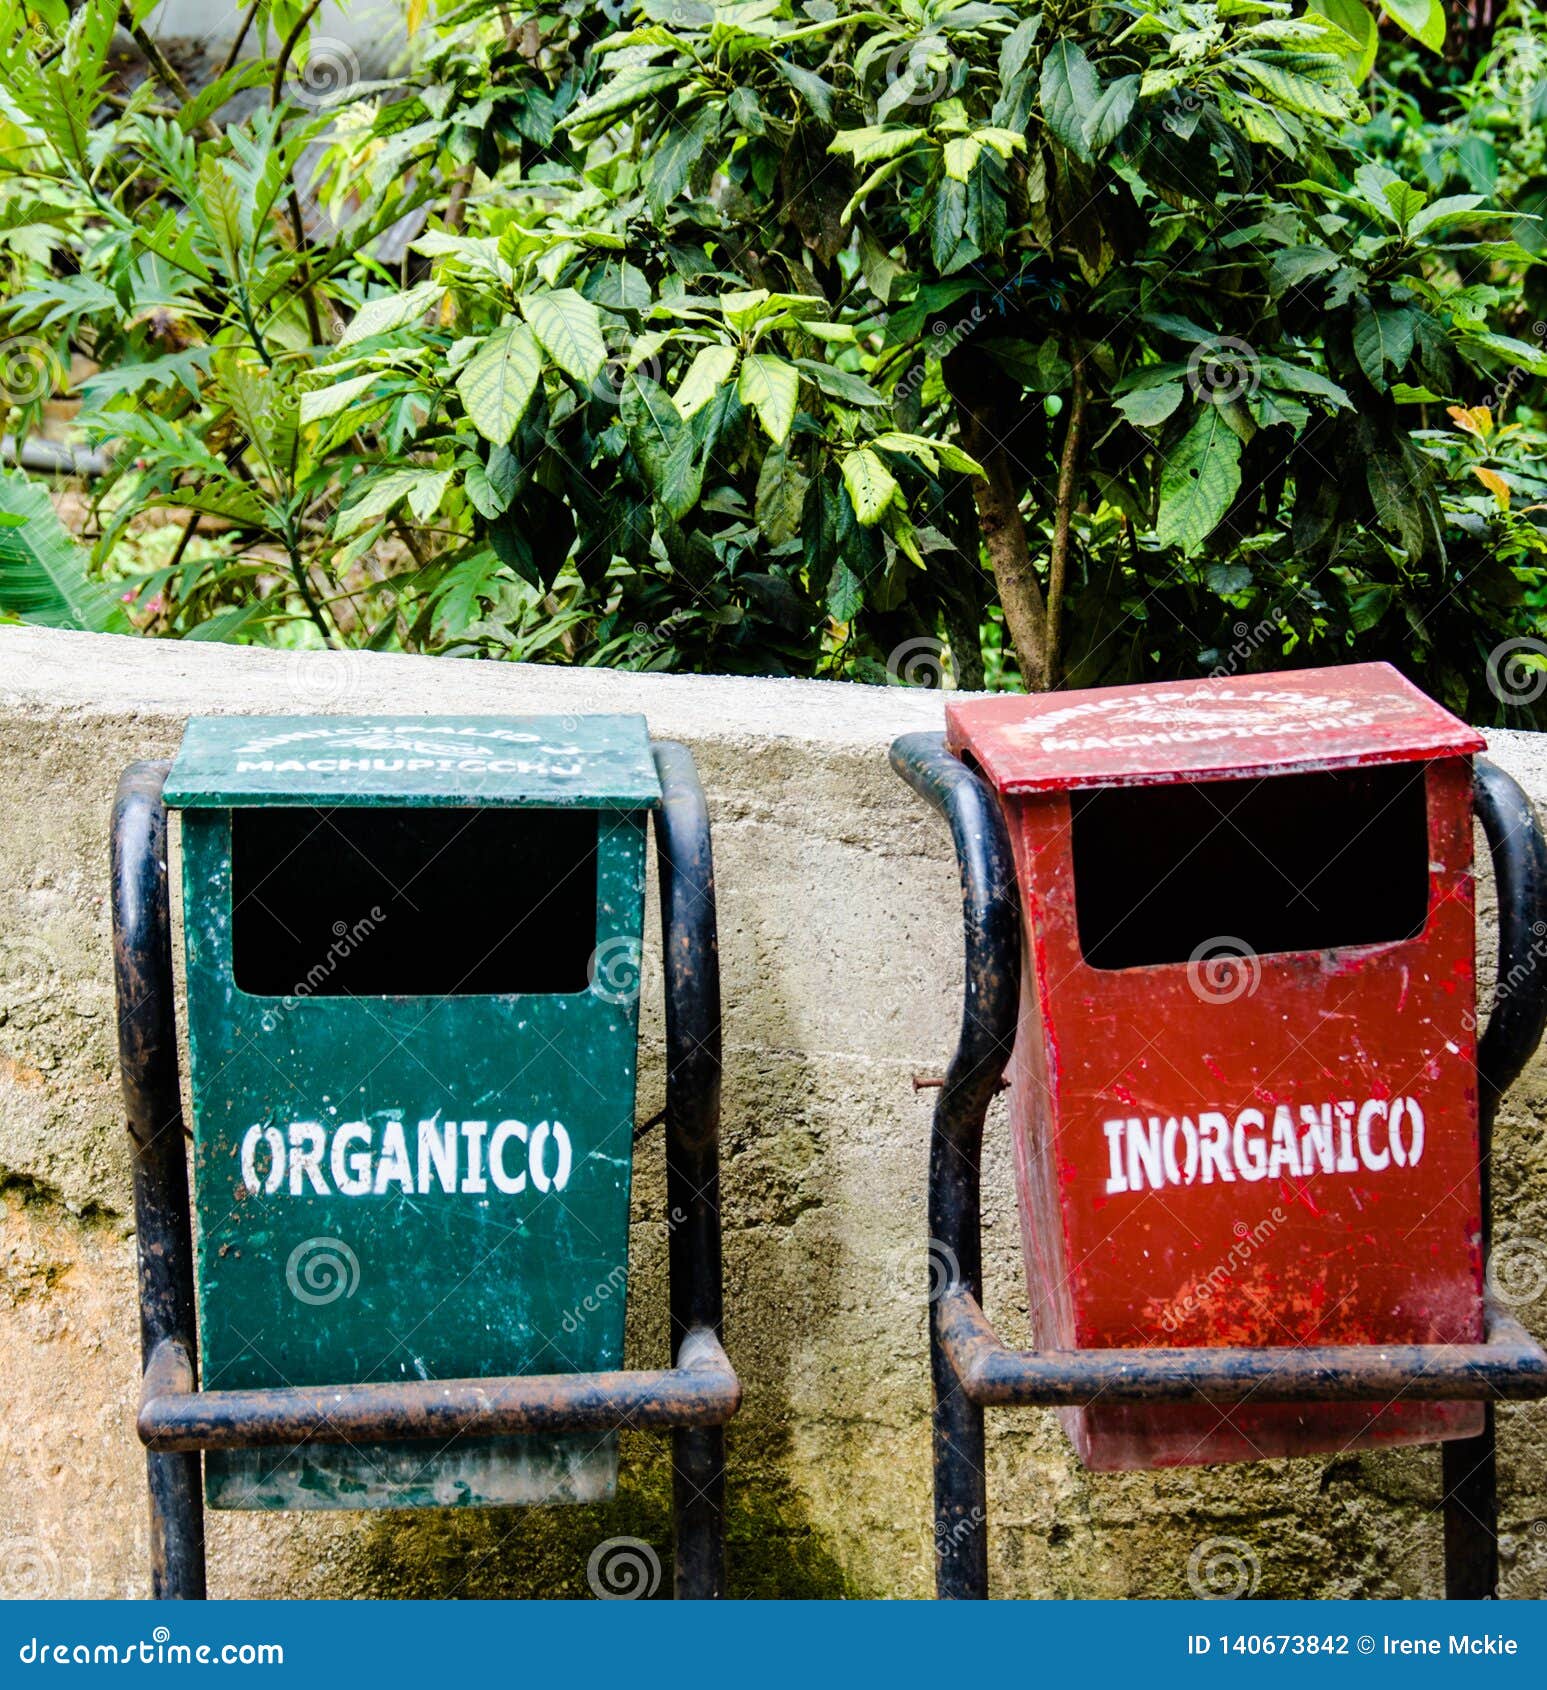 peru, may, rural village, recycling bins, organico and inorganico,